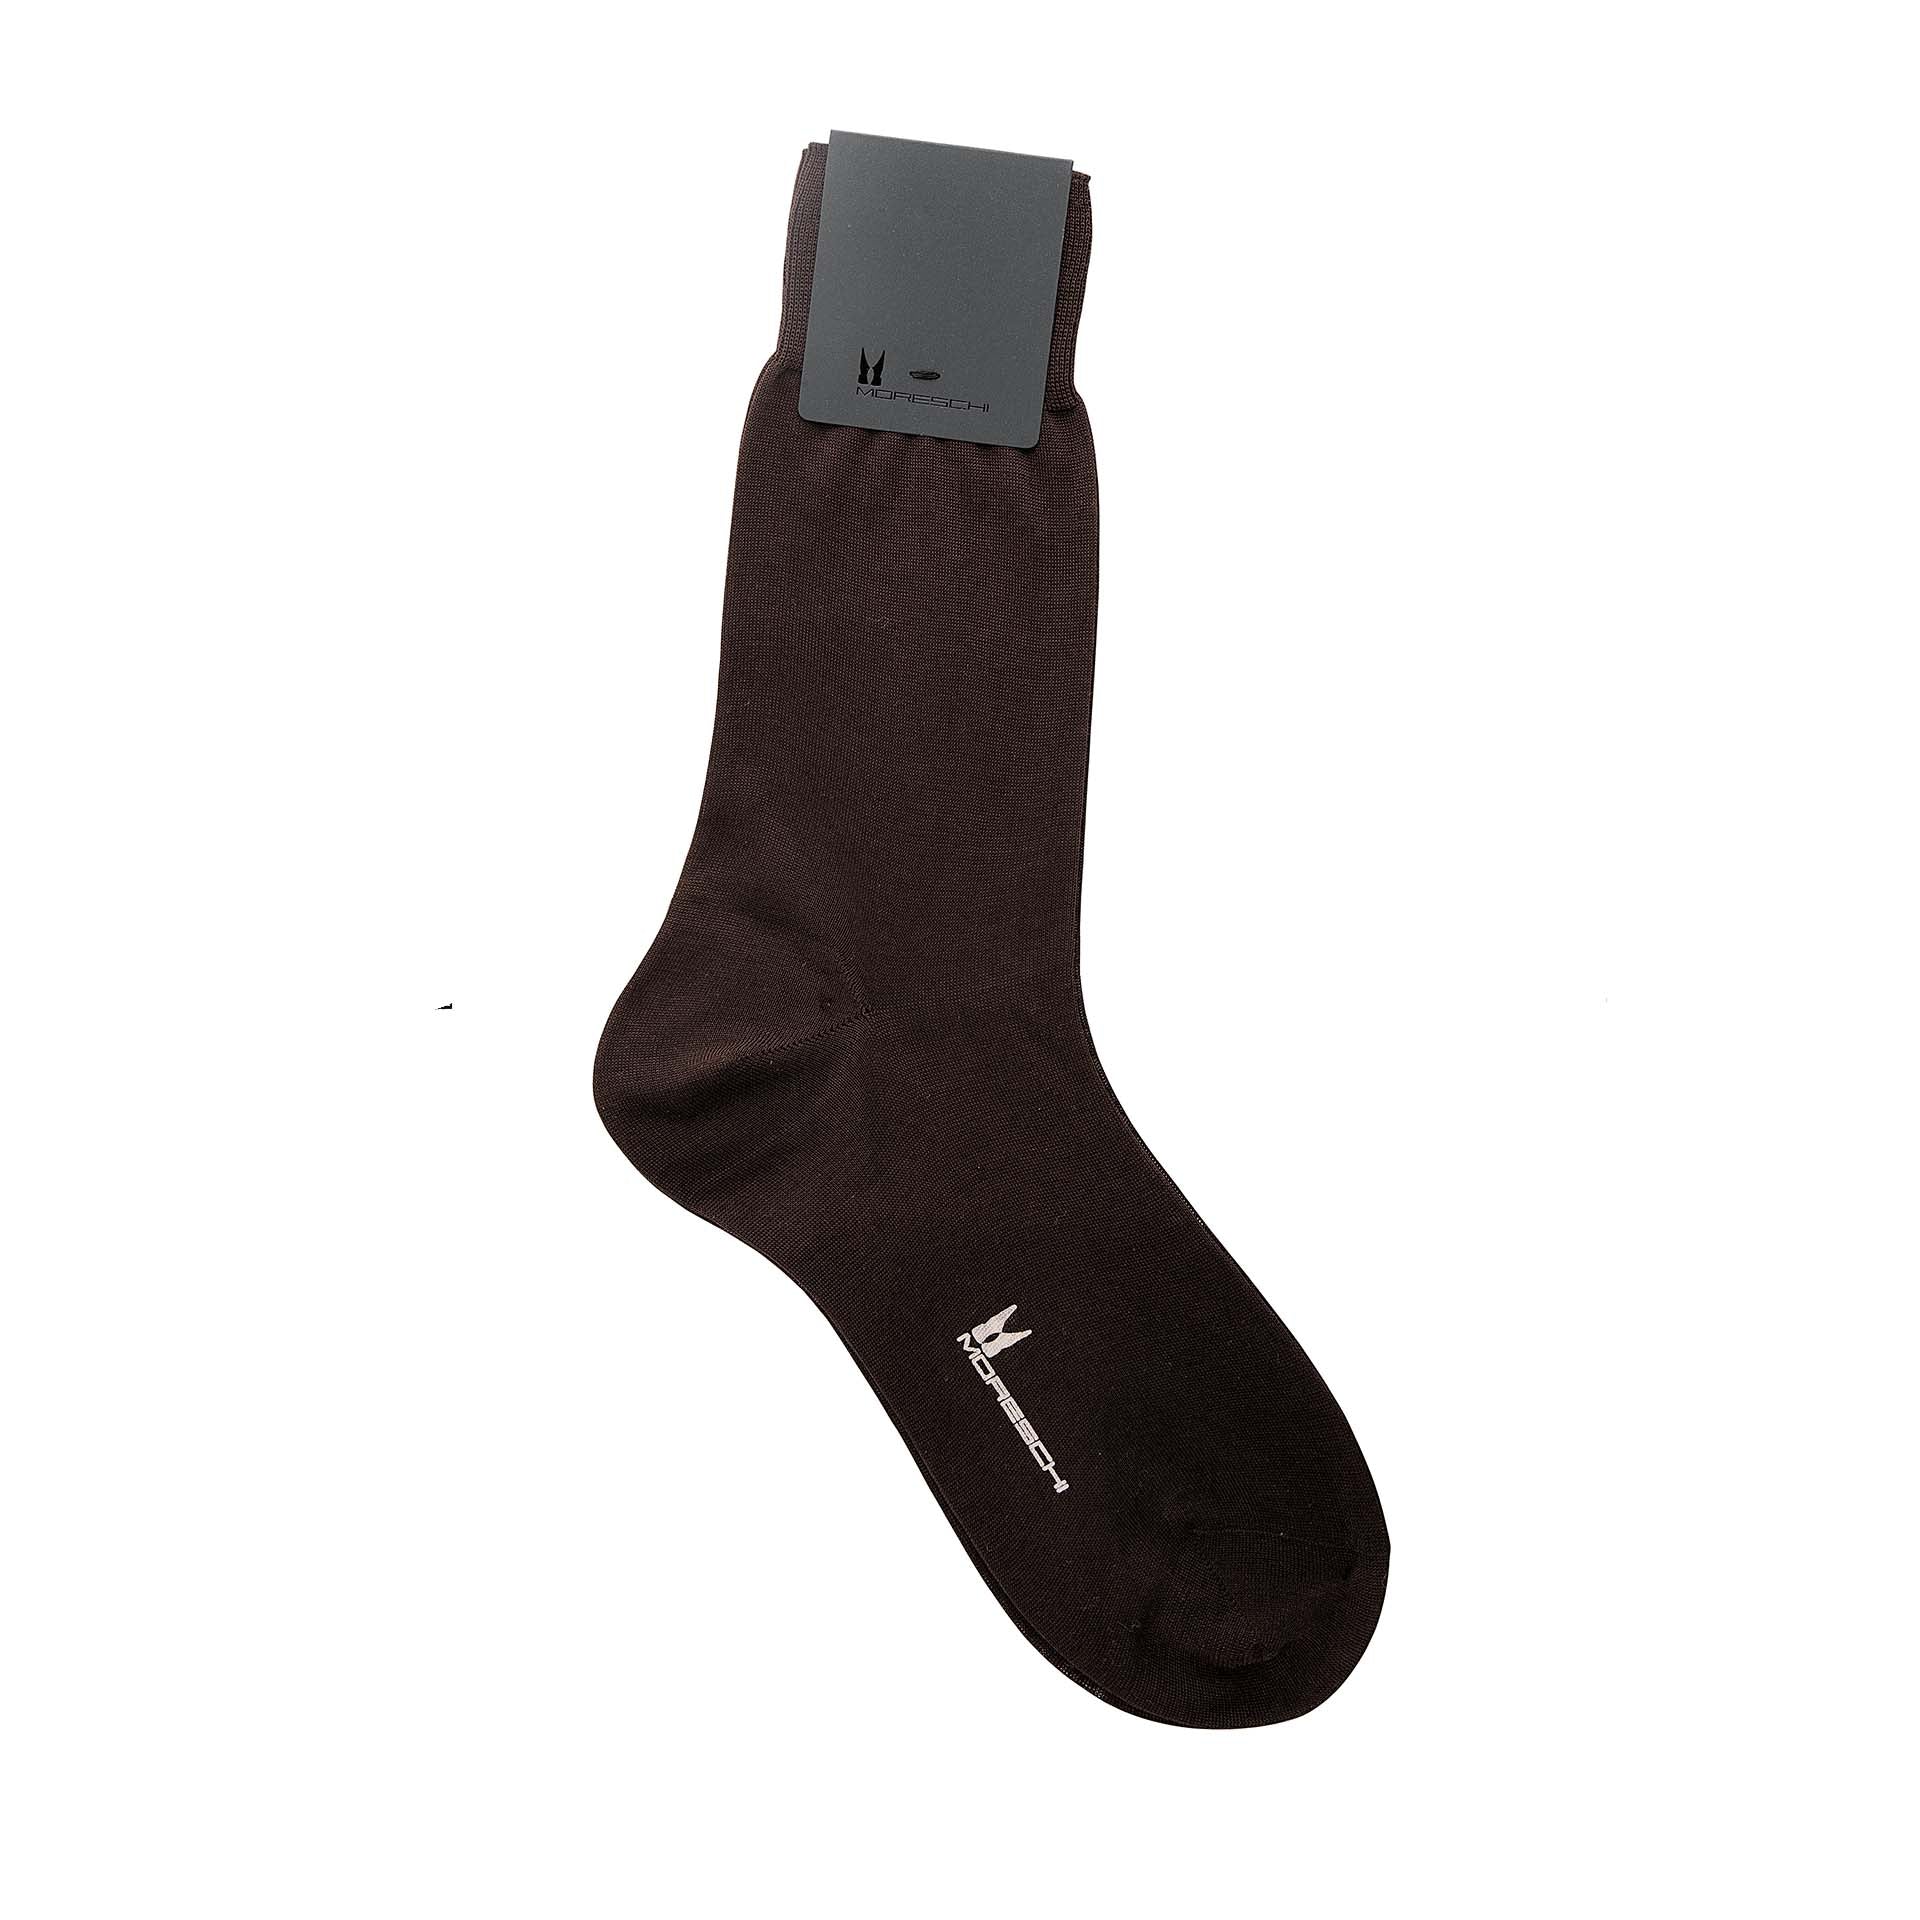 Dark brown cotton socks